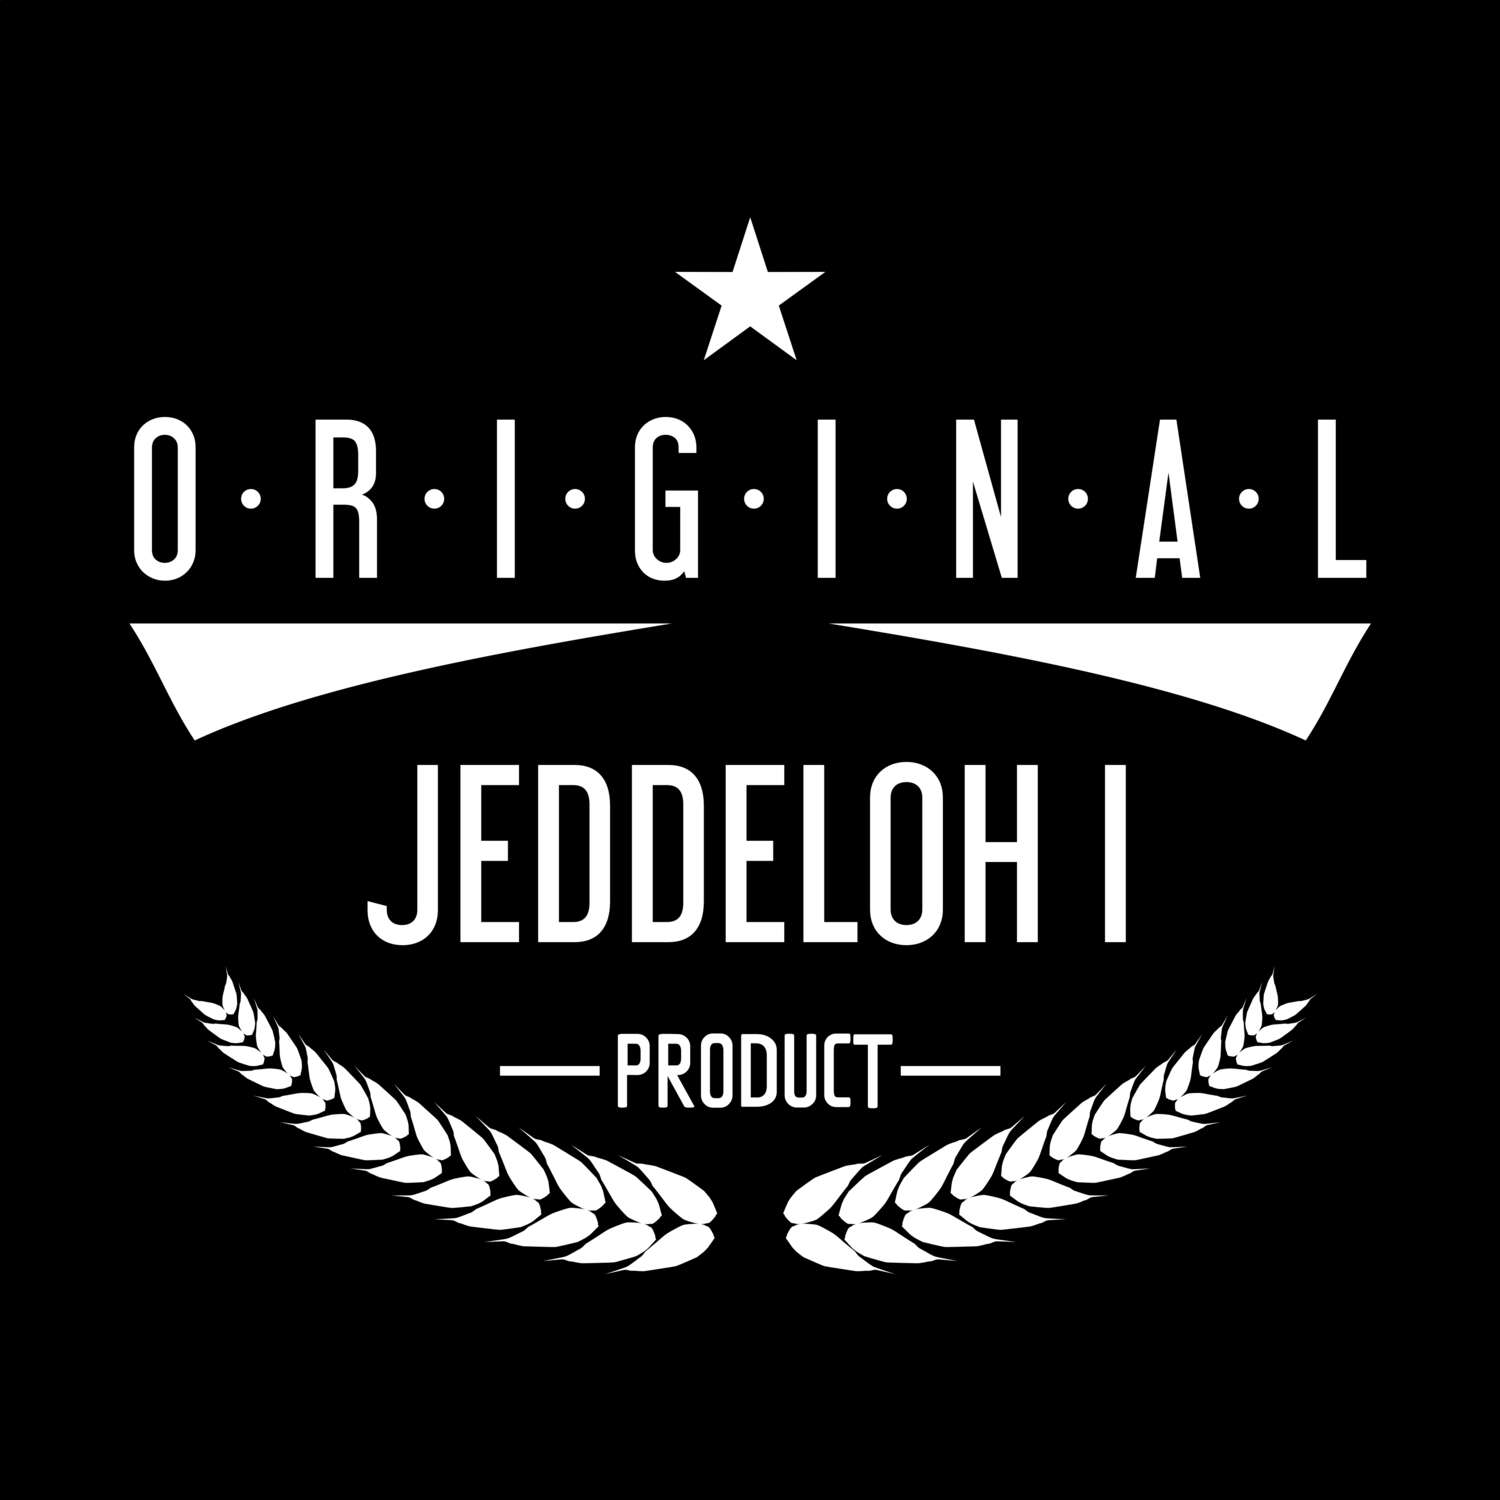 Jeddeloh I T-Shirt »Original Product«